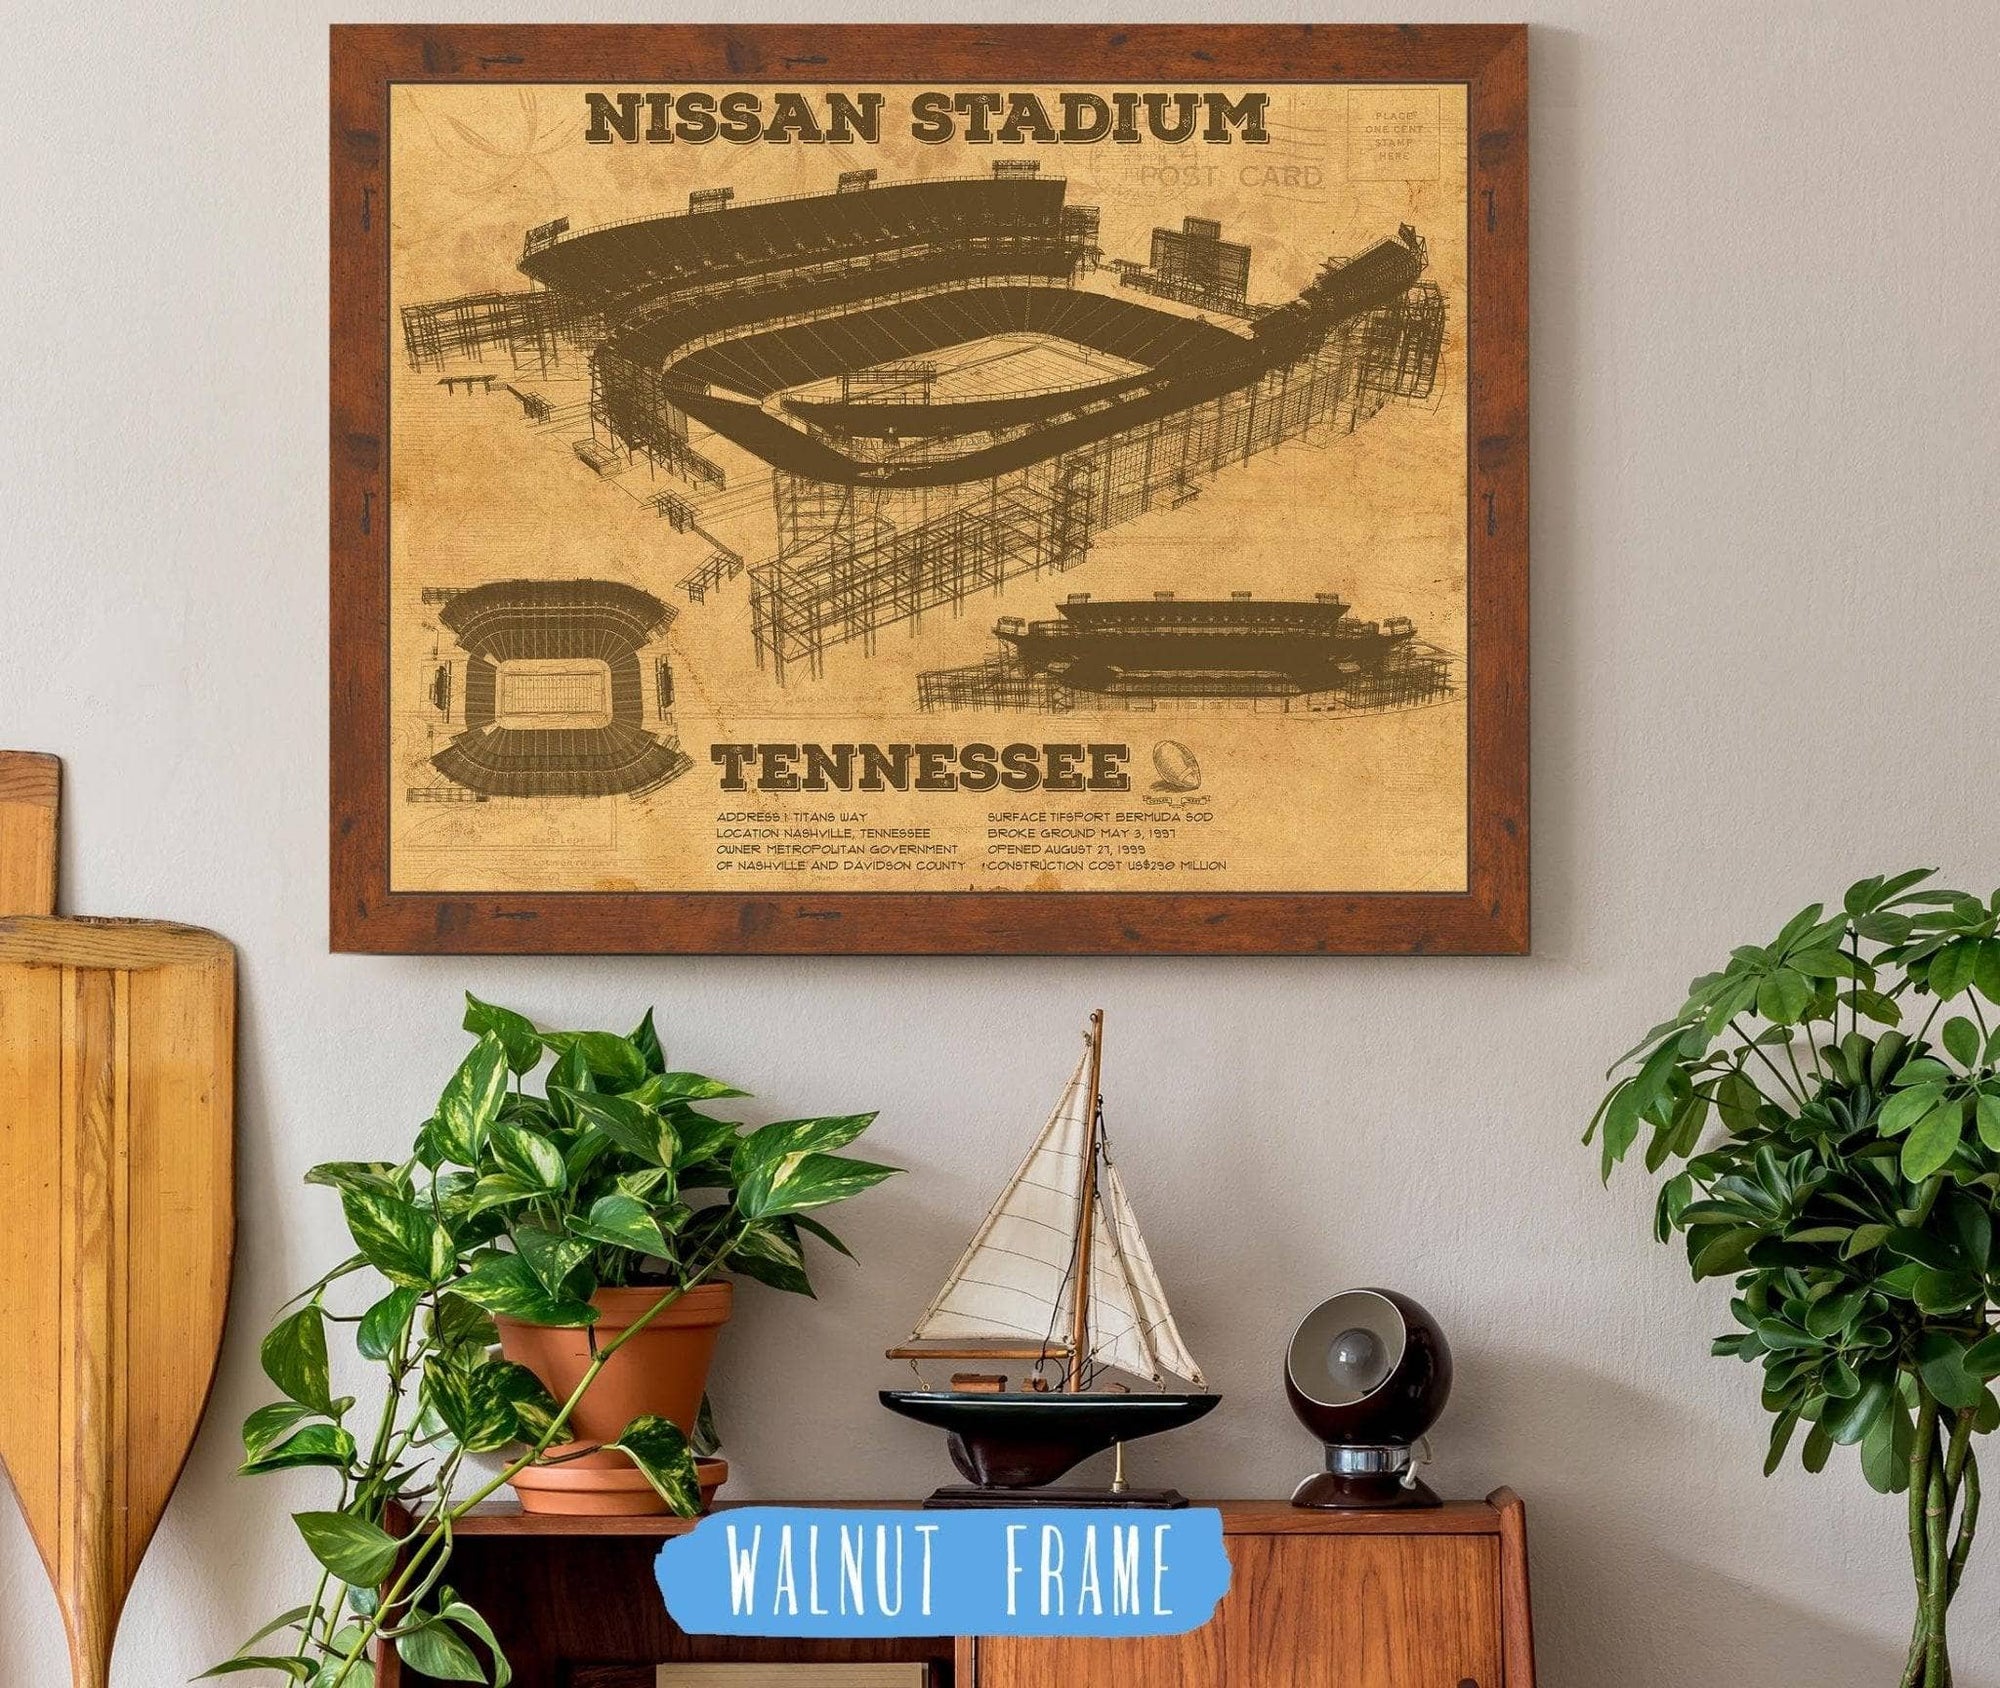 Cutler West Pro Football Collection 14" x 11" / Walnut Frame Tennessee Titans Nissan Stadium - Vintage Football Print 723978276_71090